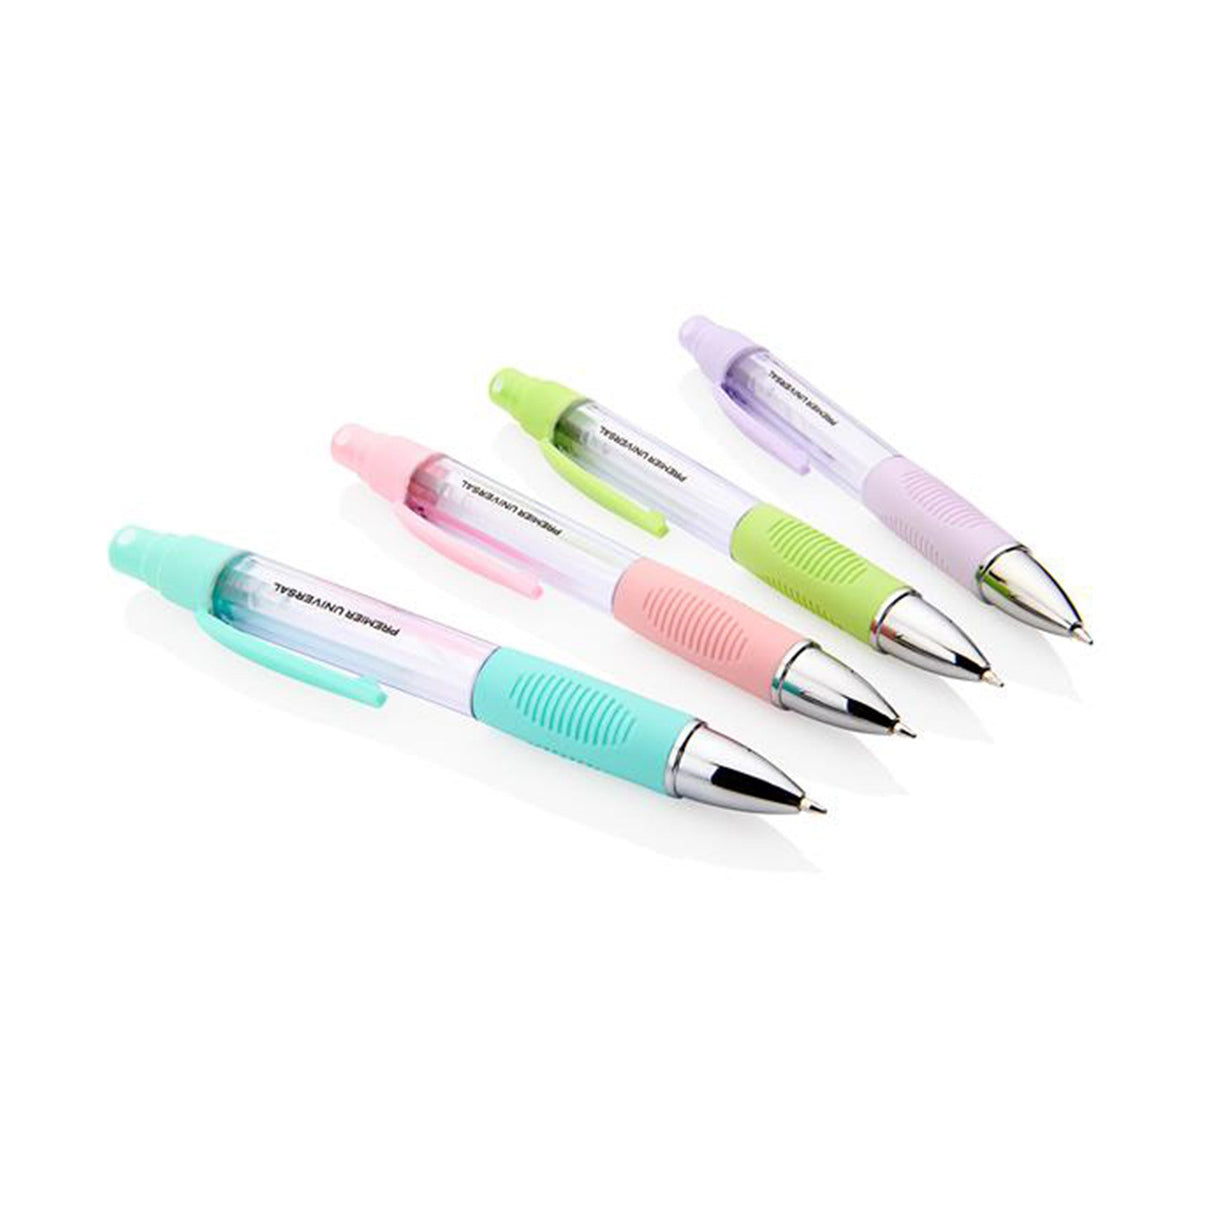 Premier Universal Antibacterial Spray Pen - Refillable - 4ml - Pink | Stationery Shop UK